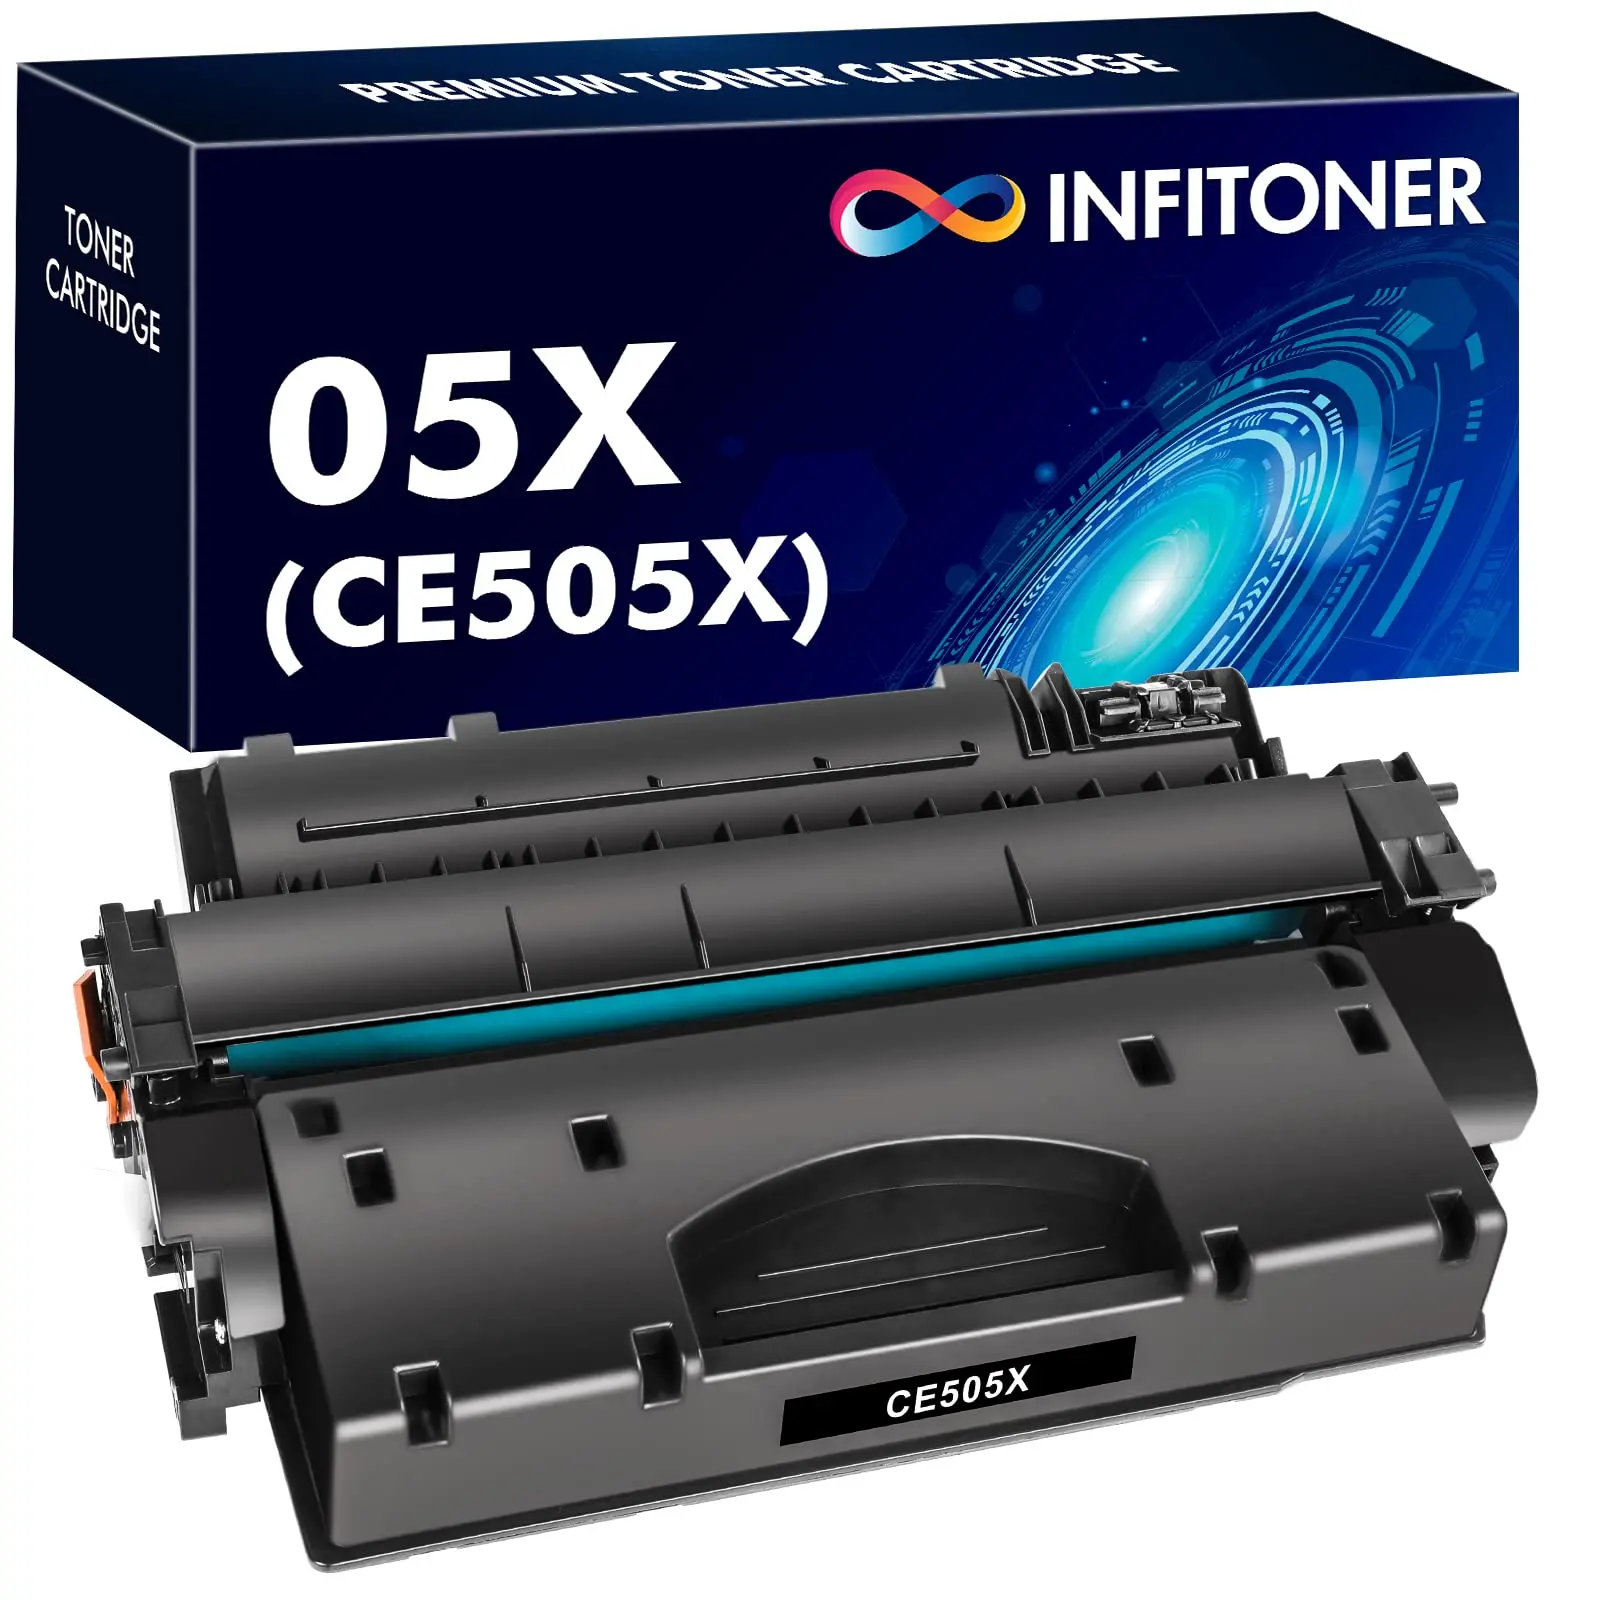 Hp ce505x toner cartridge: high-quality print performance